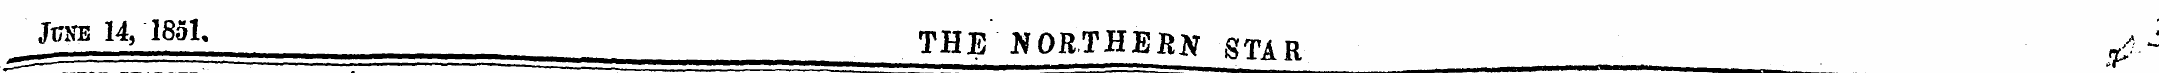 June 14, 1851, TH]p KQRTHEHK g TAR ^